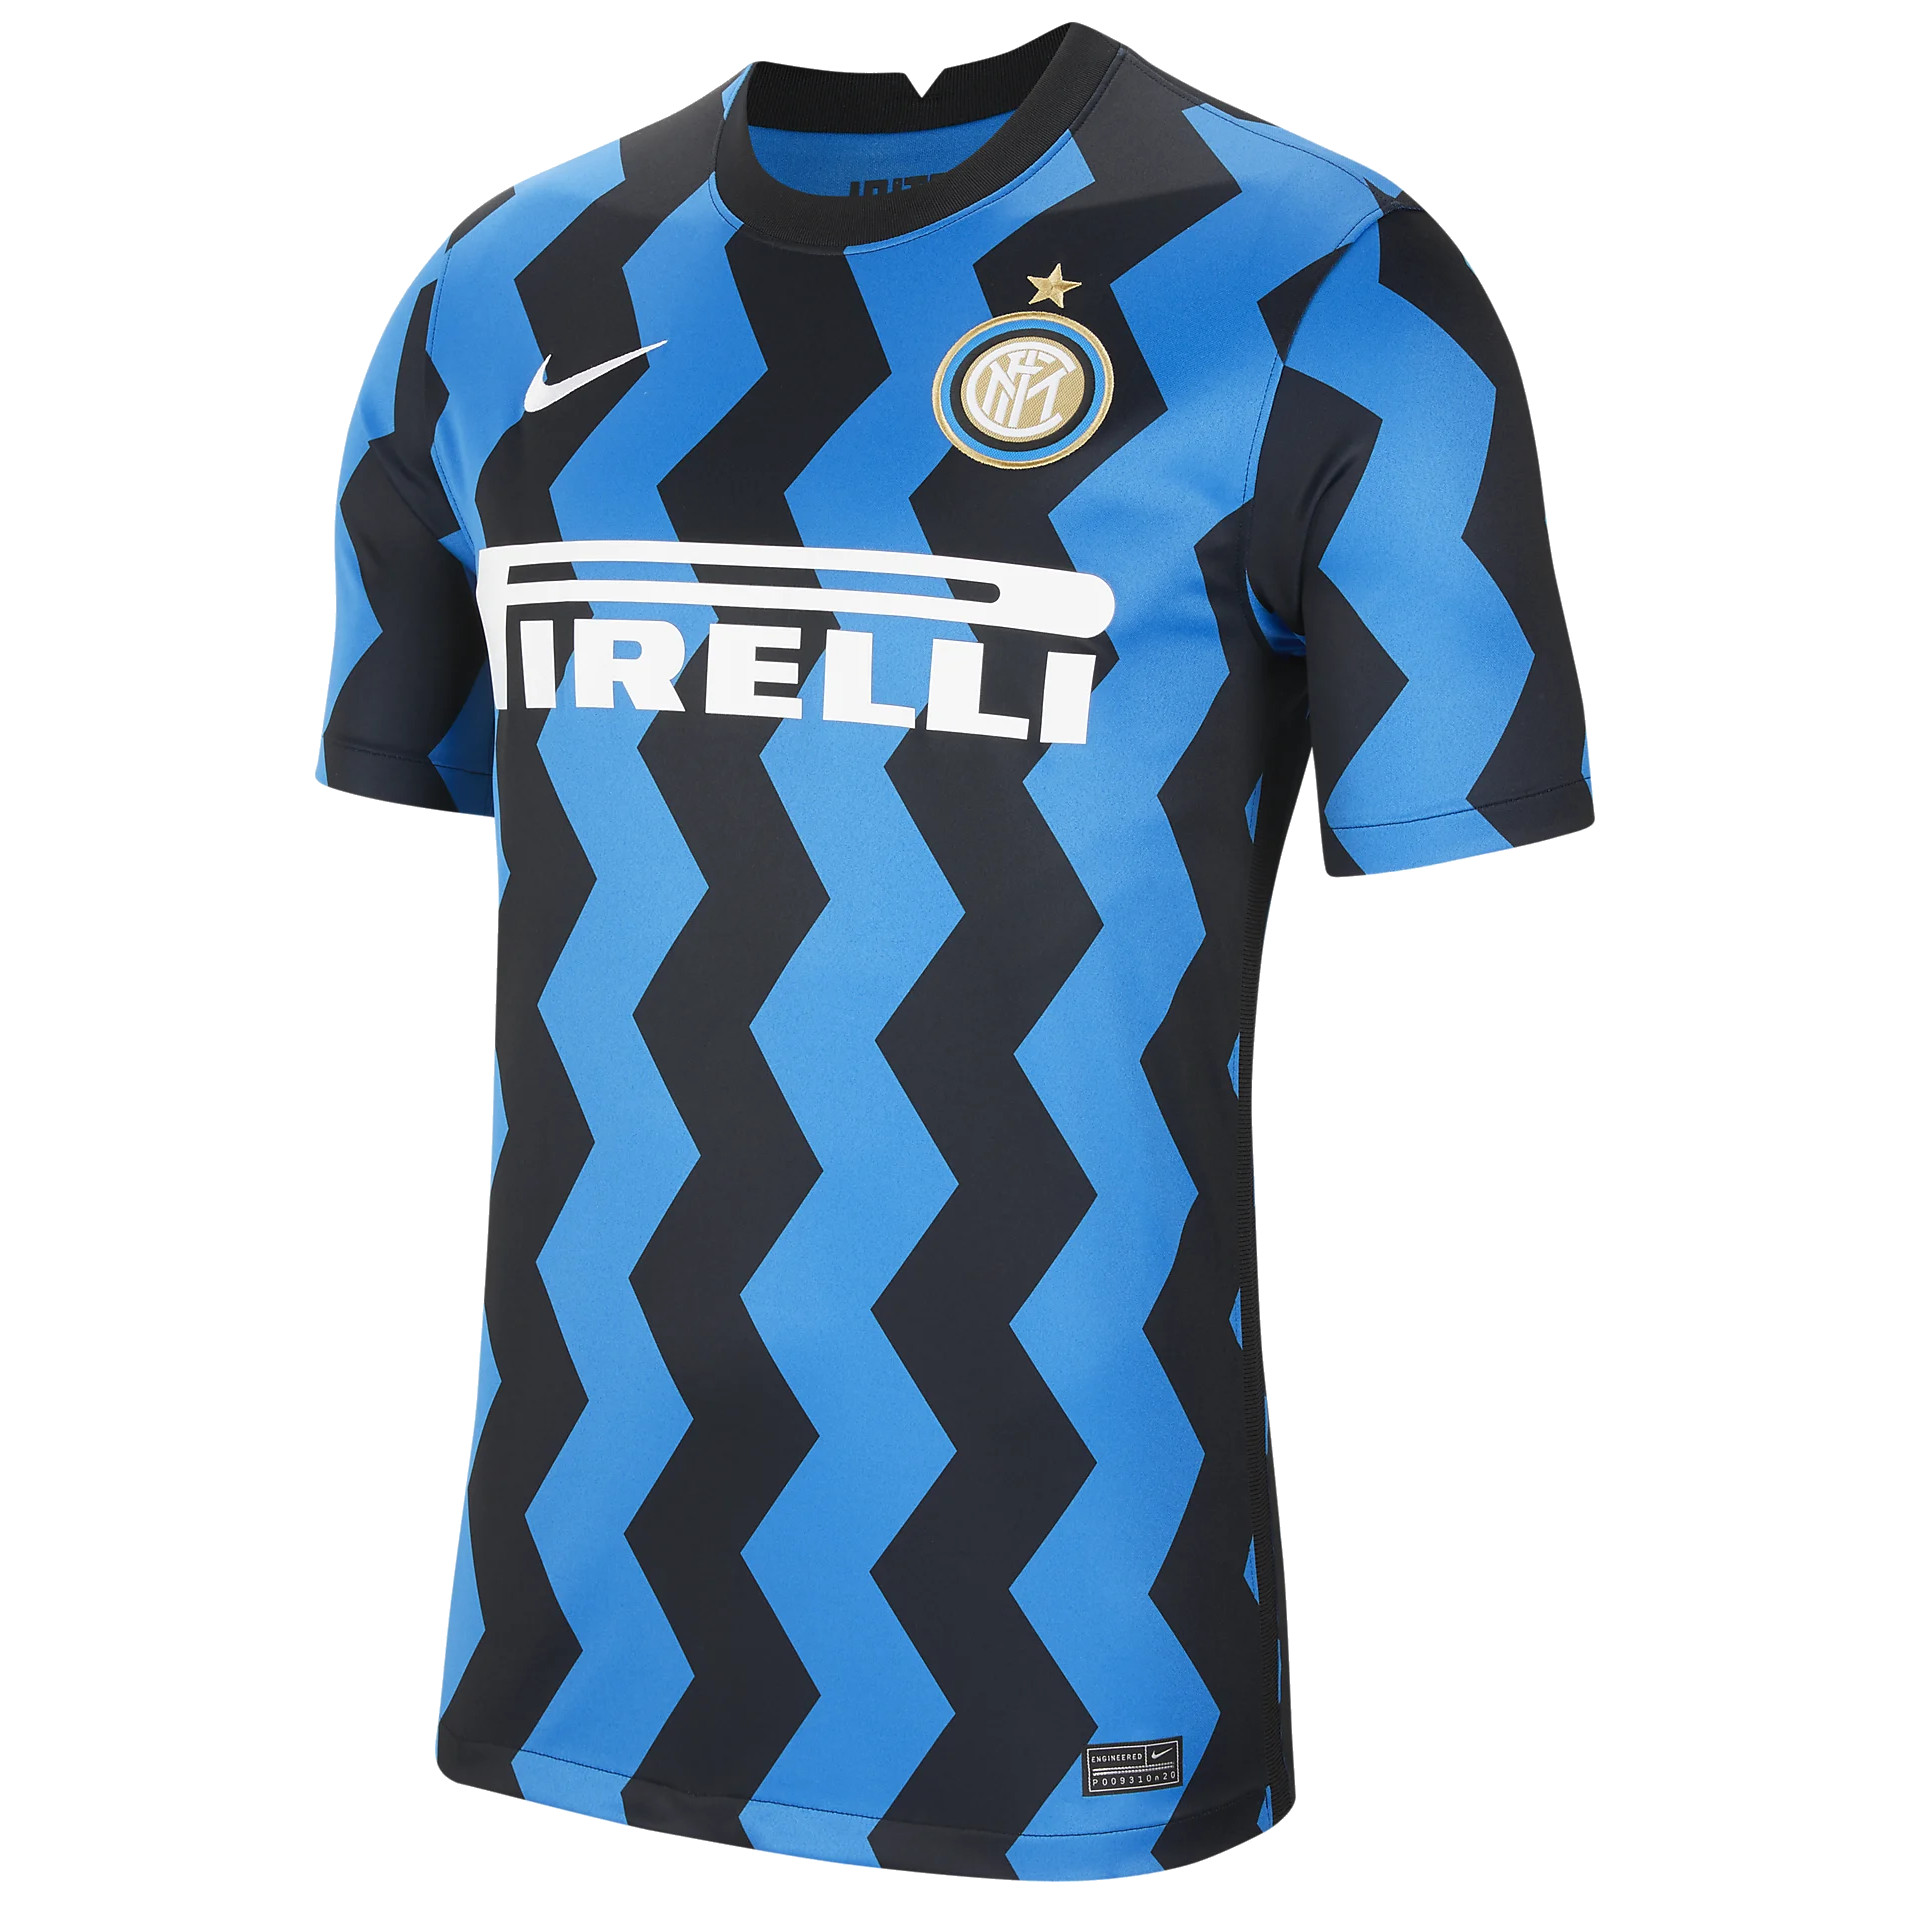 Lyrisch Etna toewijzen Inter Milan thuis shirt 2020-2021 - Voetbalshirts.com